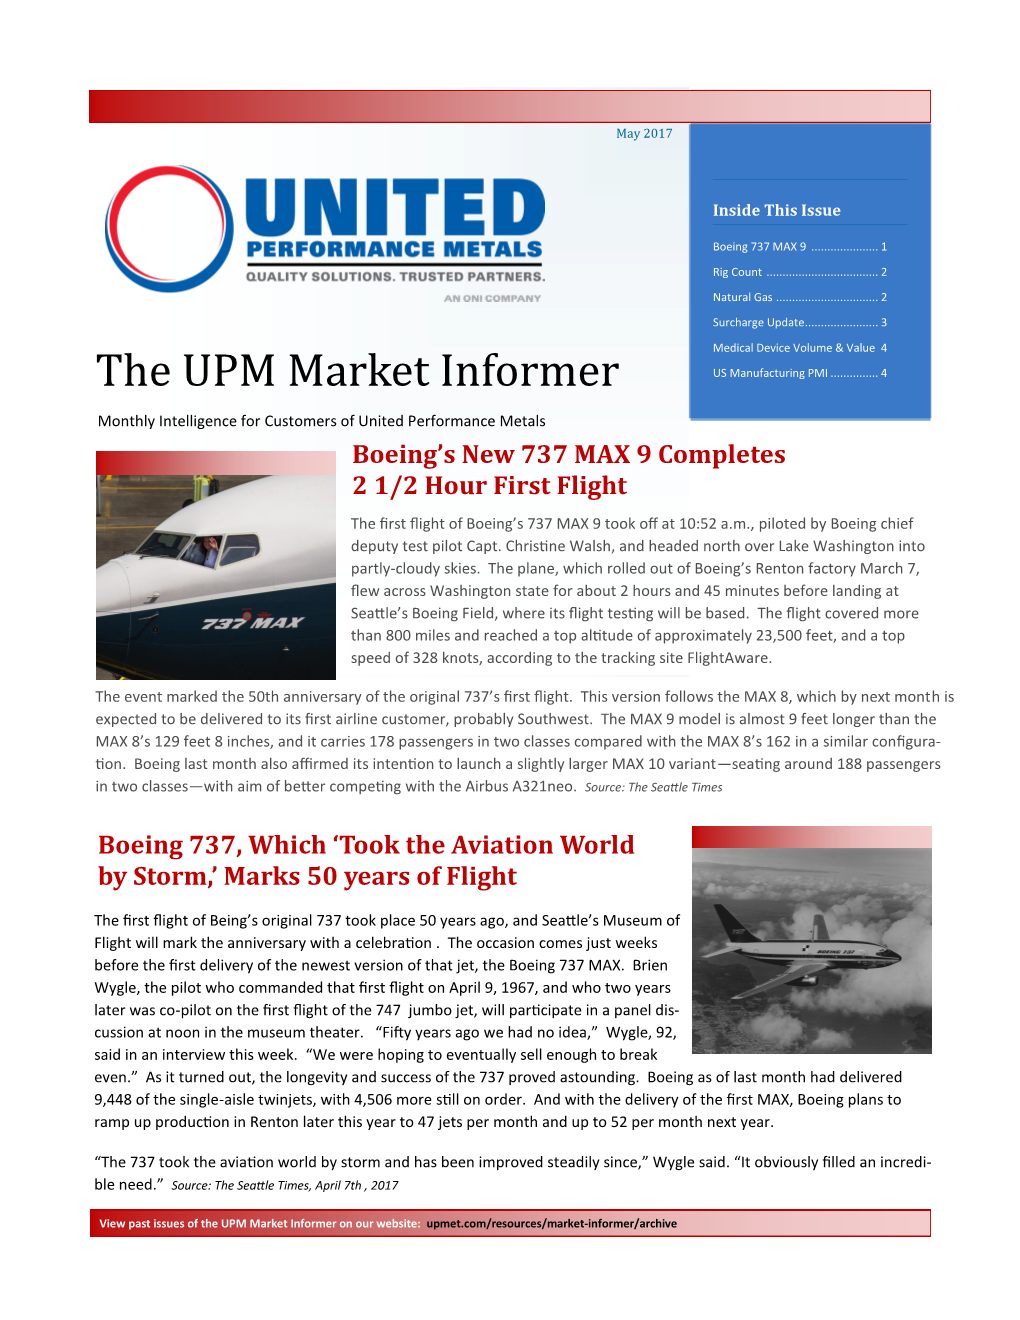 The UPM Market Informer US Manufacturing PMI